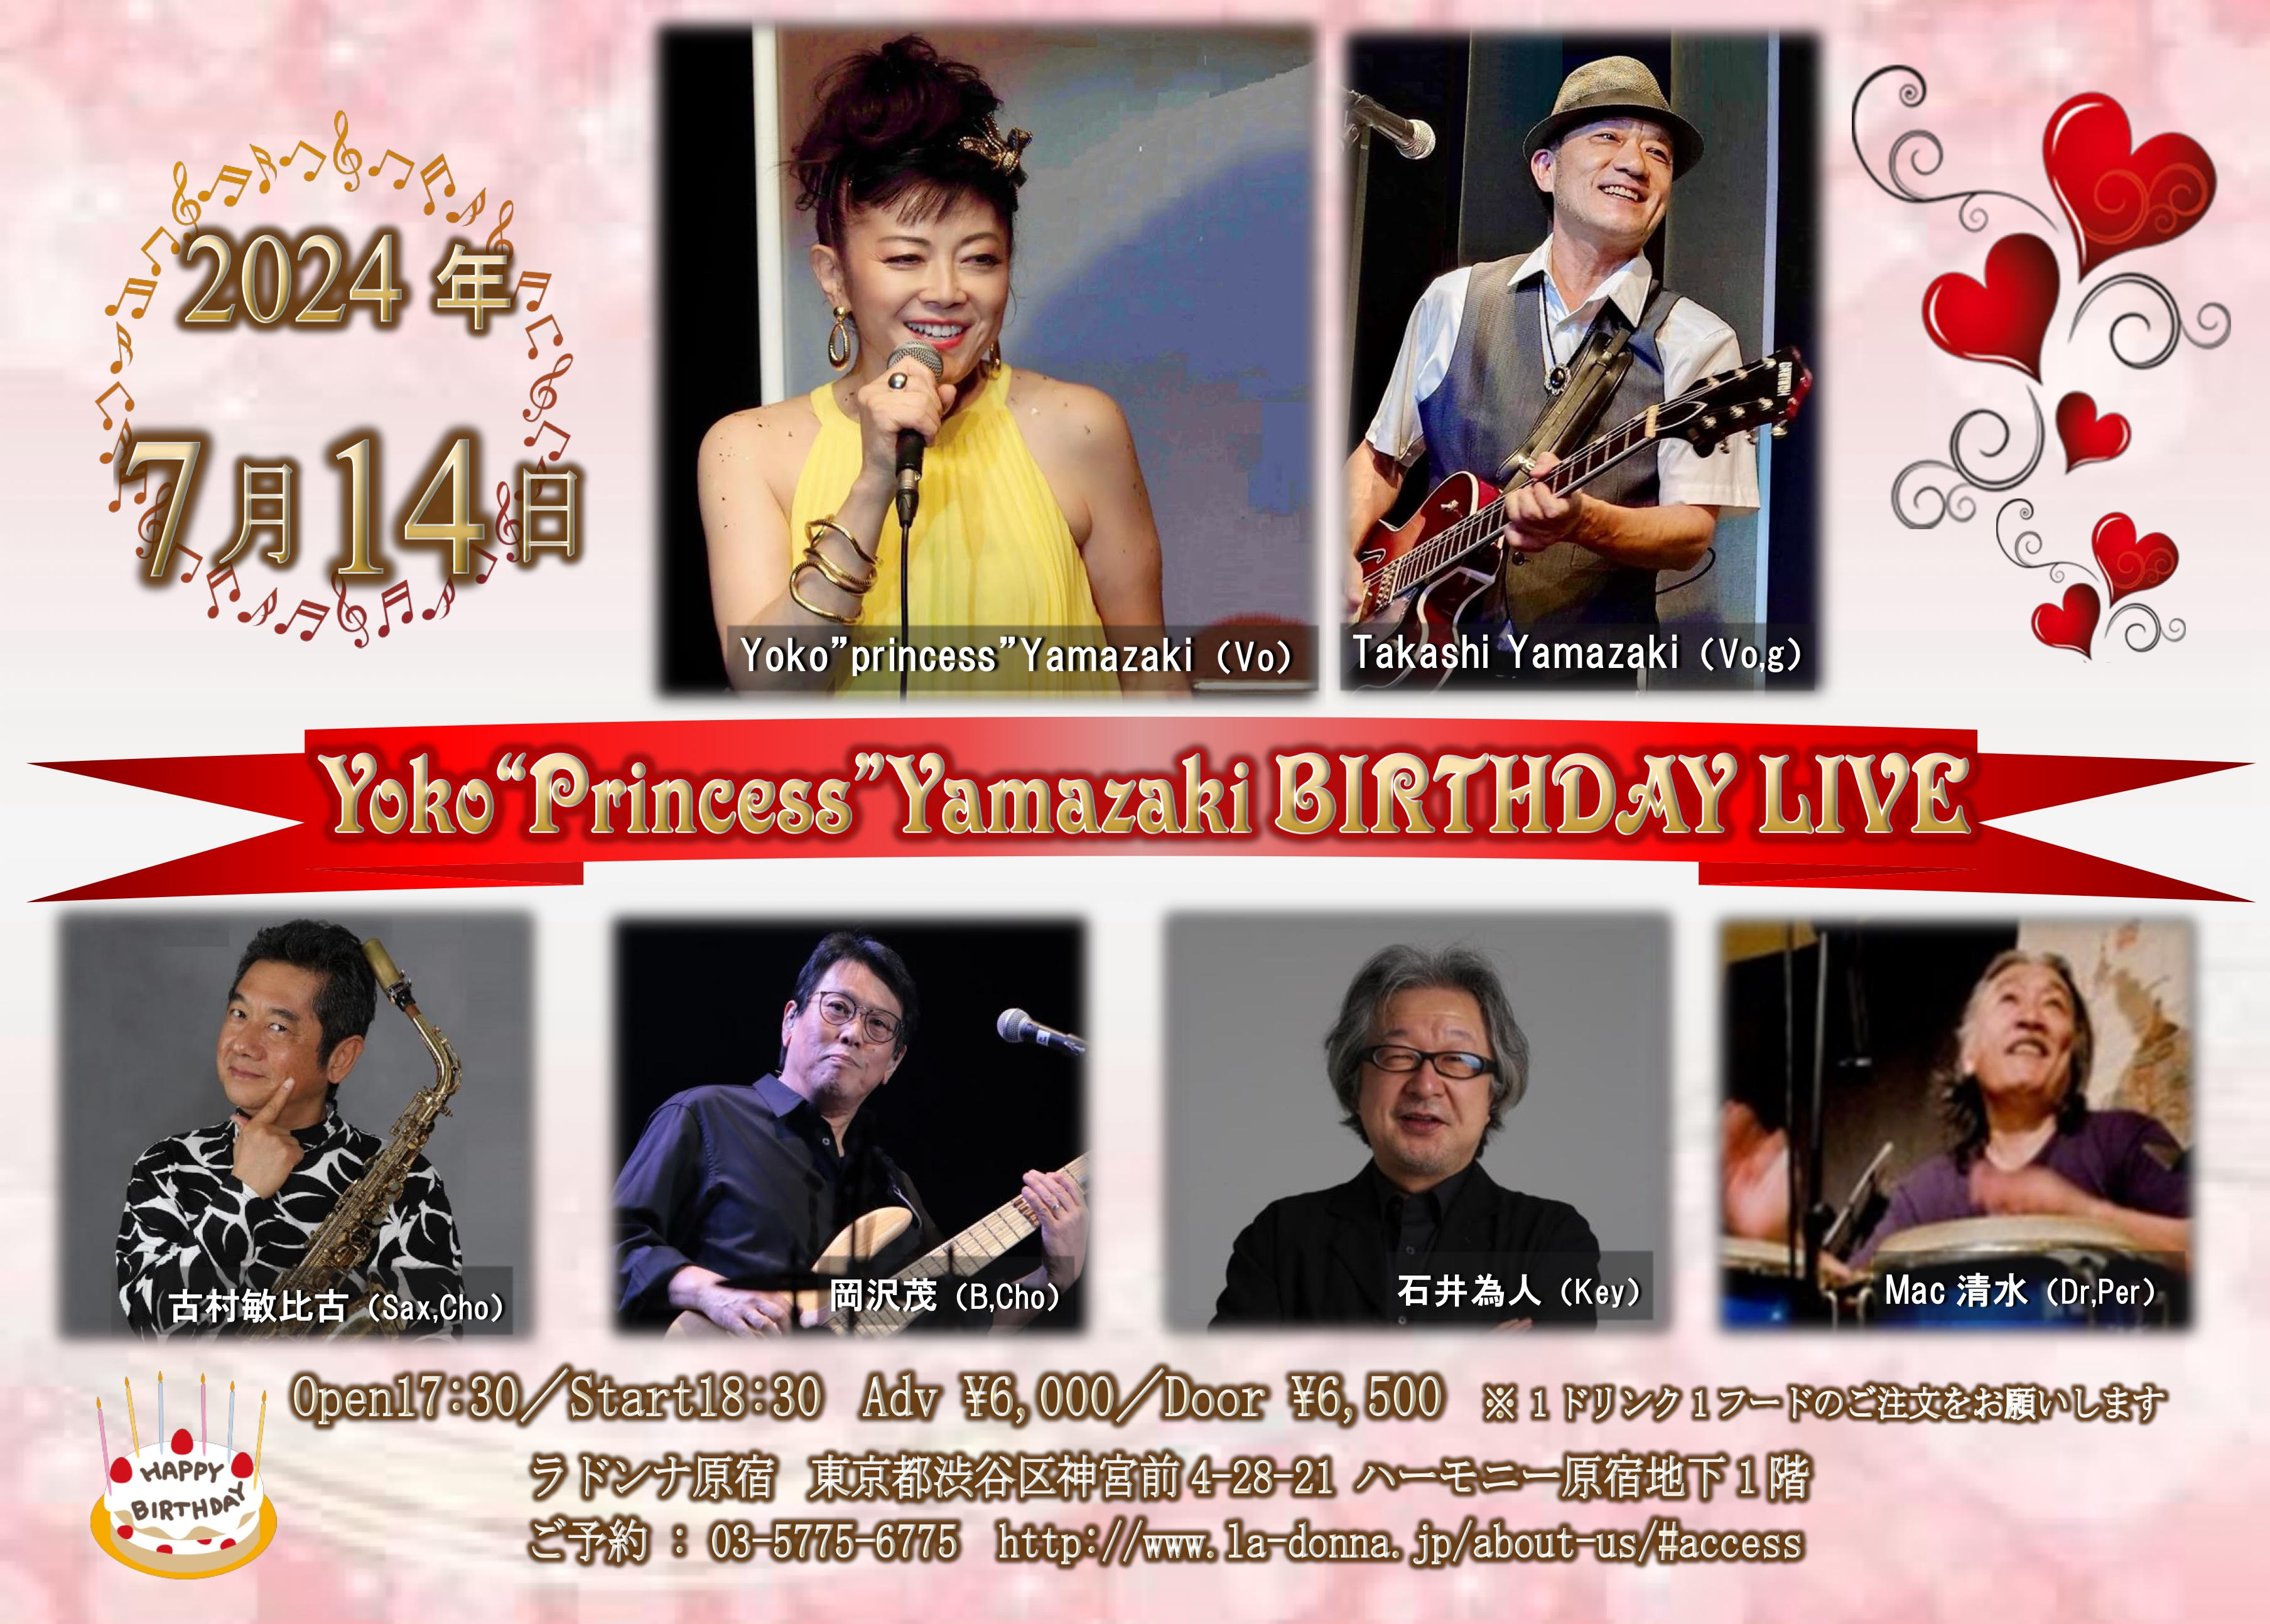 Yoko “Princess“Yamazaki BIRTHDAY LIVE